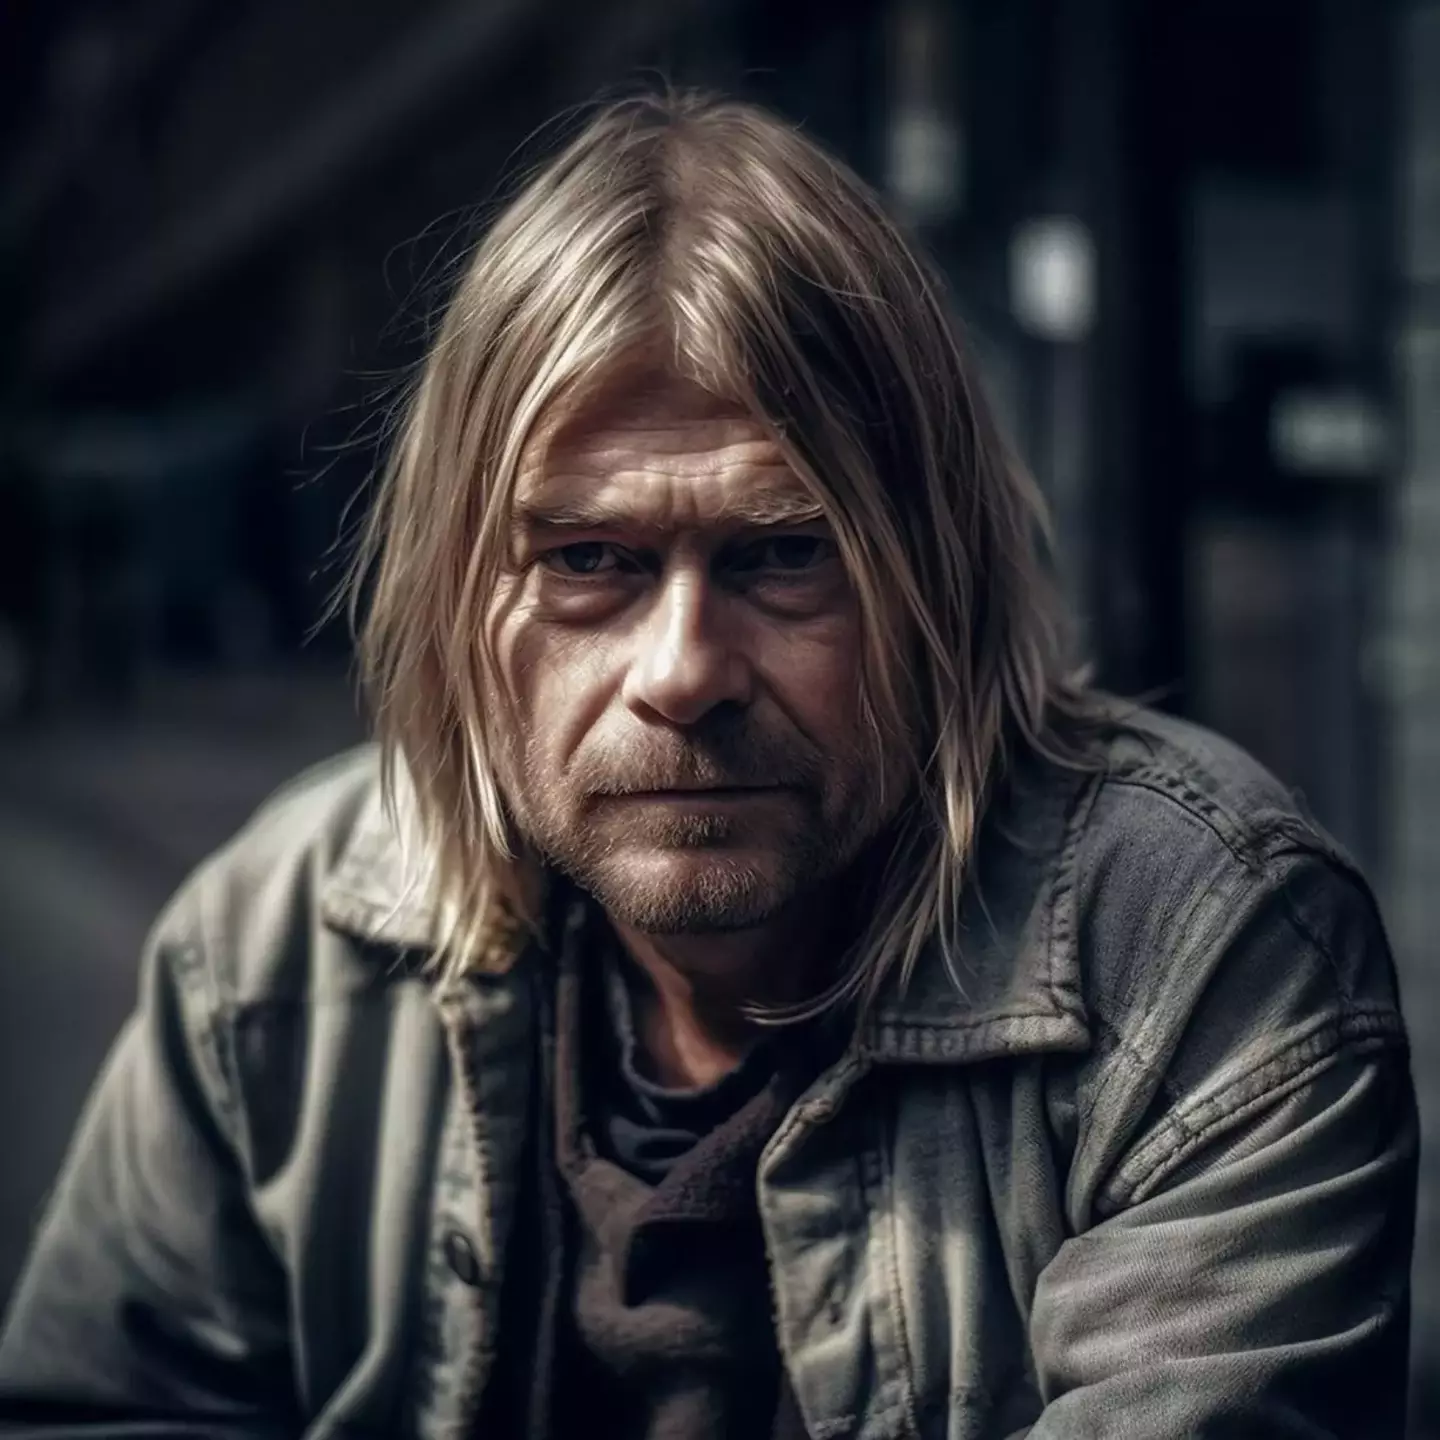 Kurt Cobain if he were alive today according to AI.